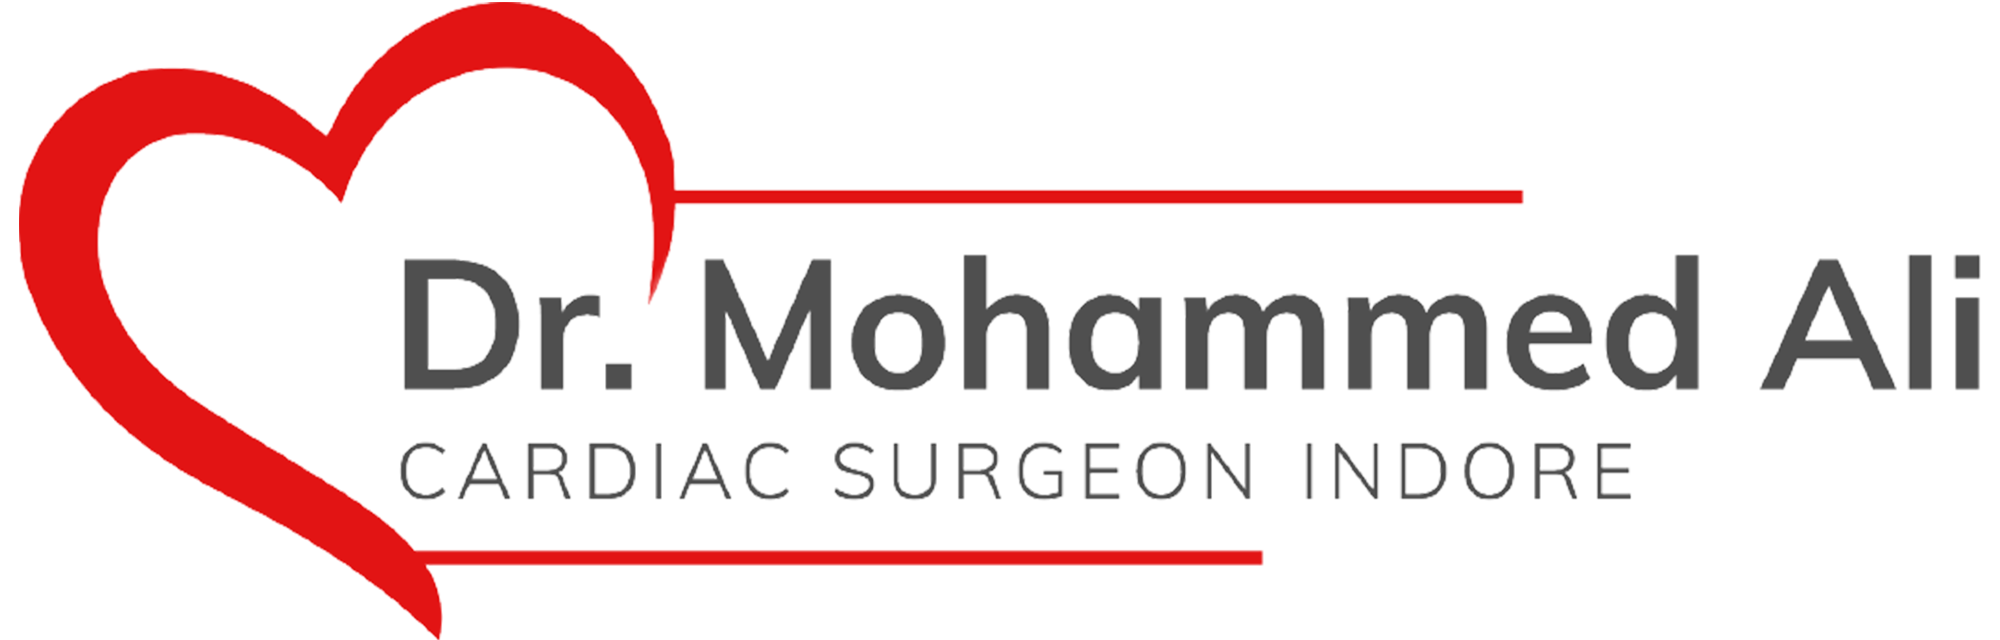 Director Of Cardiac Surgery Shalby Hospital Dr Mohammed Ali Just